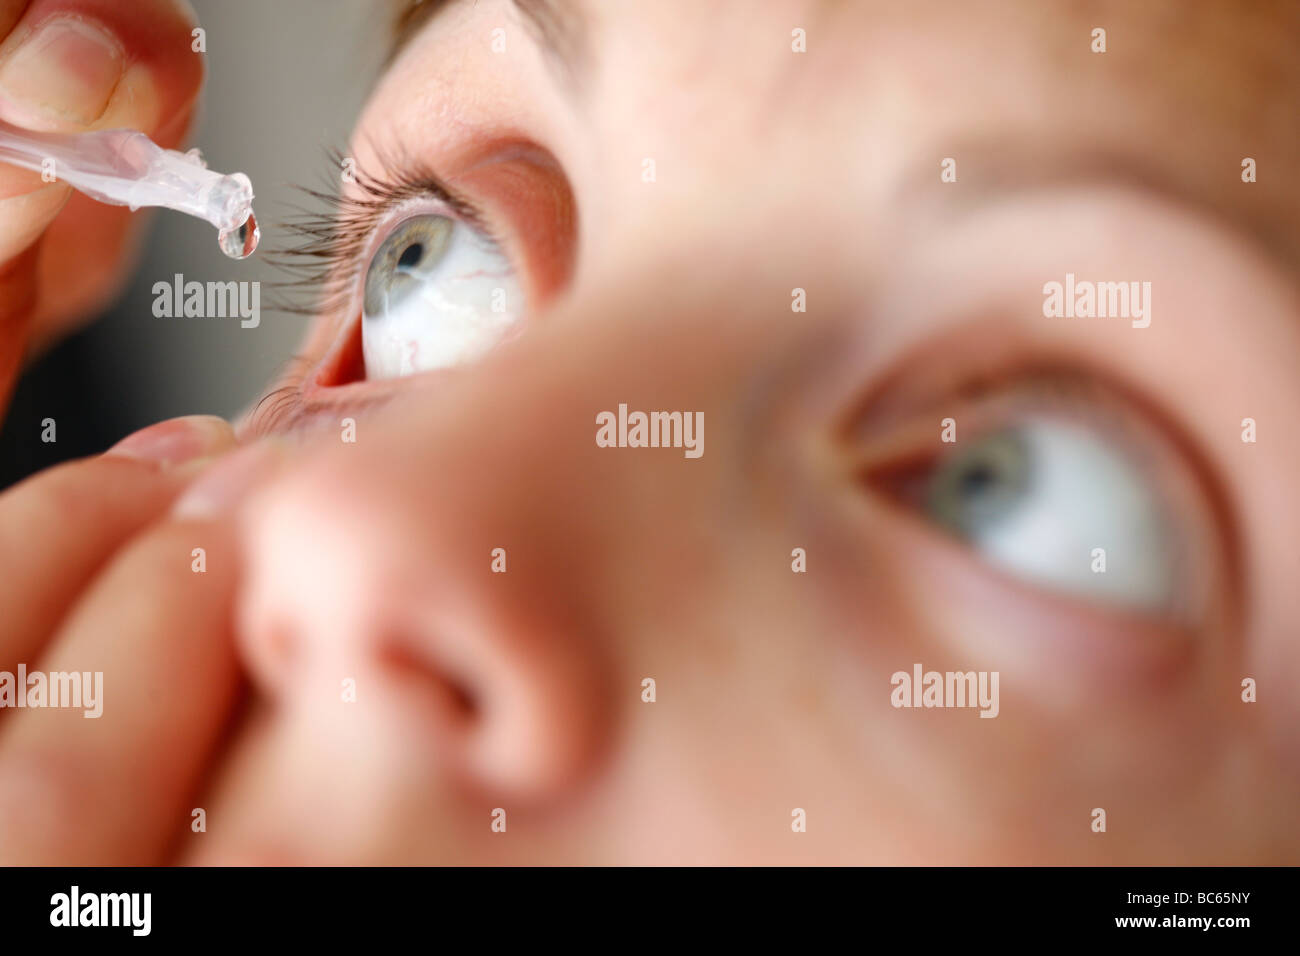 Woman is droping eyedrops into her eye Stock Photo